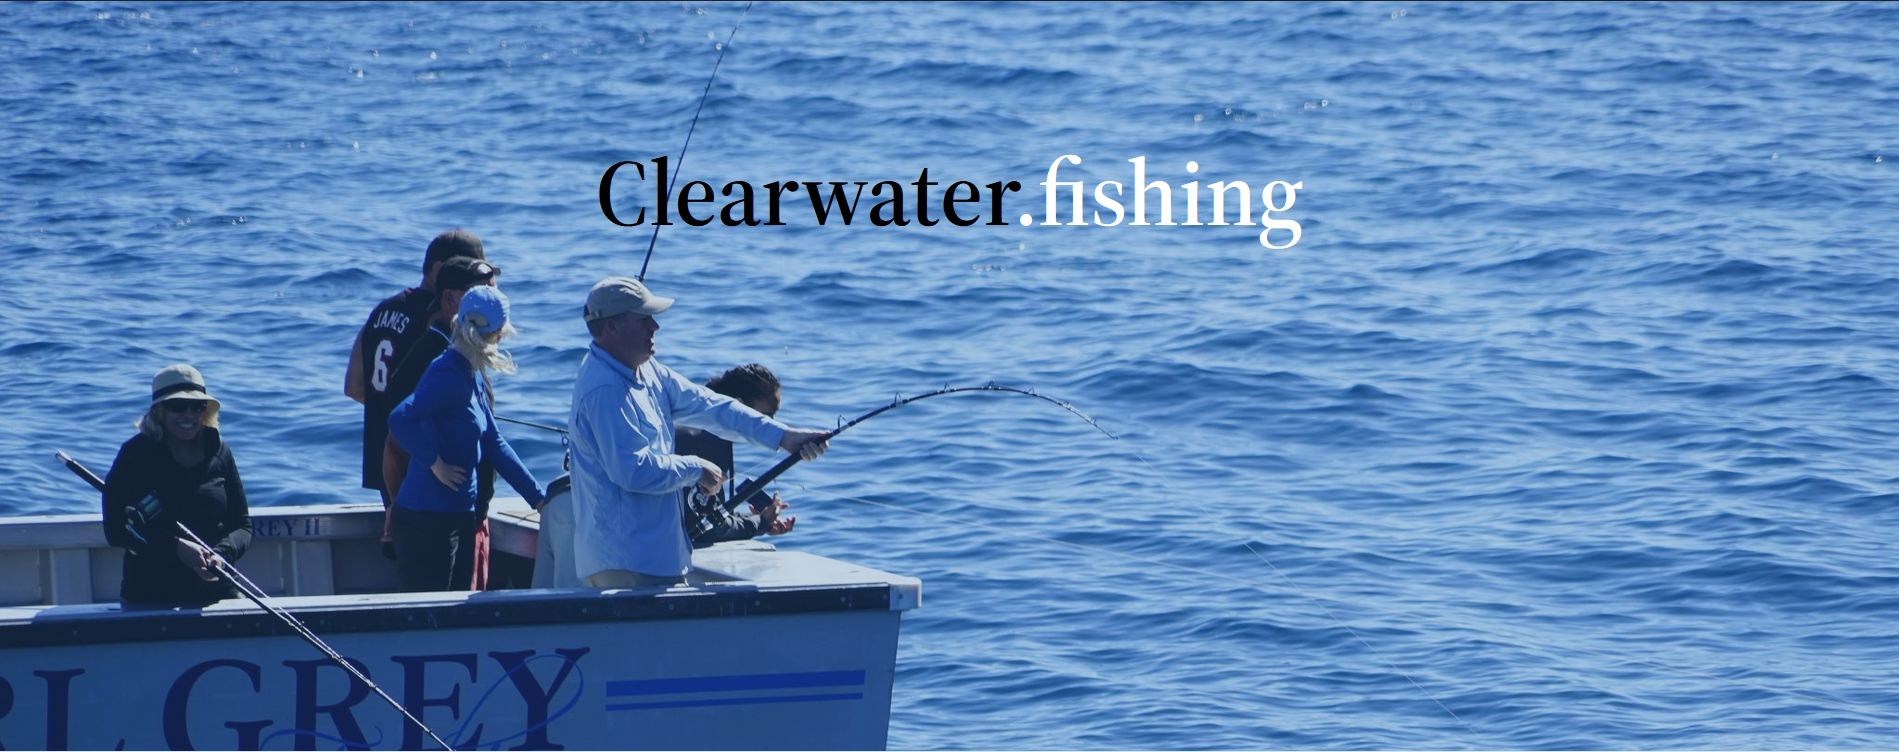 Clearwater Fishing Charter hero image